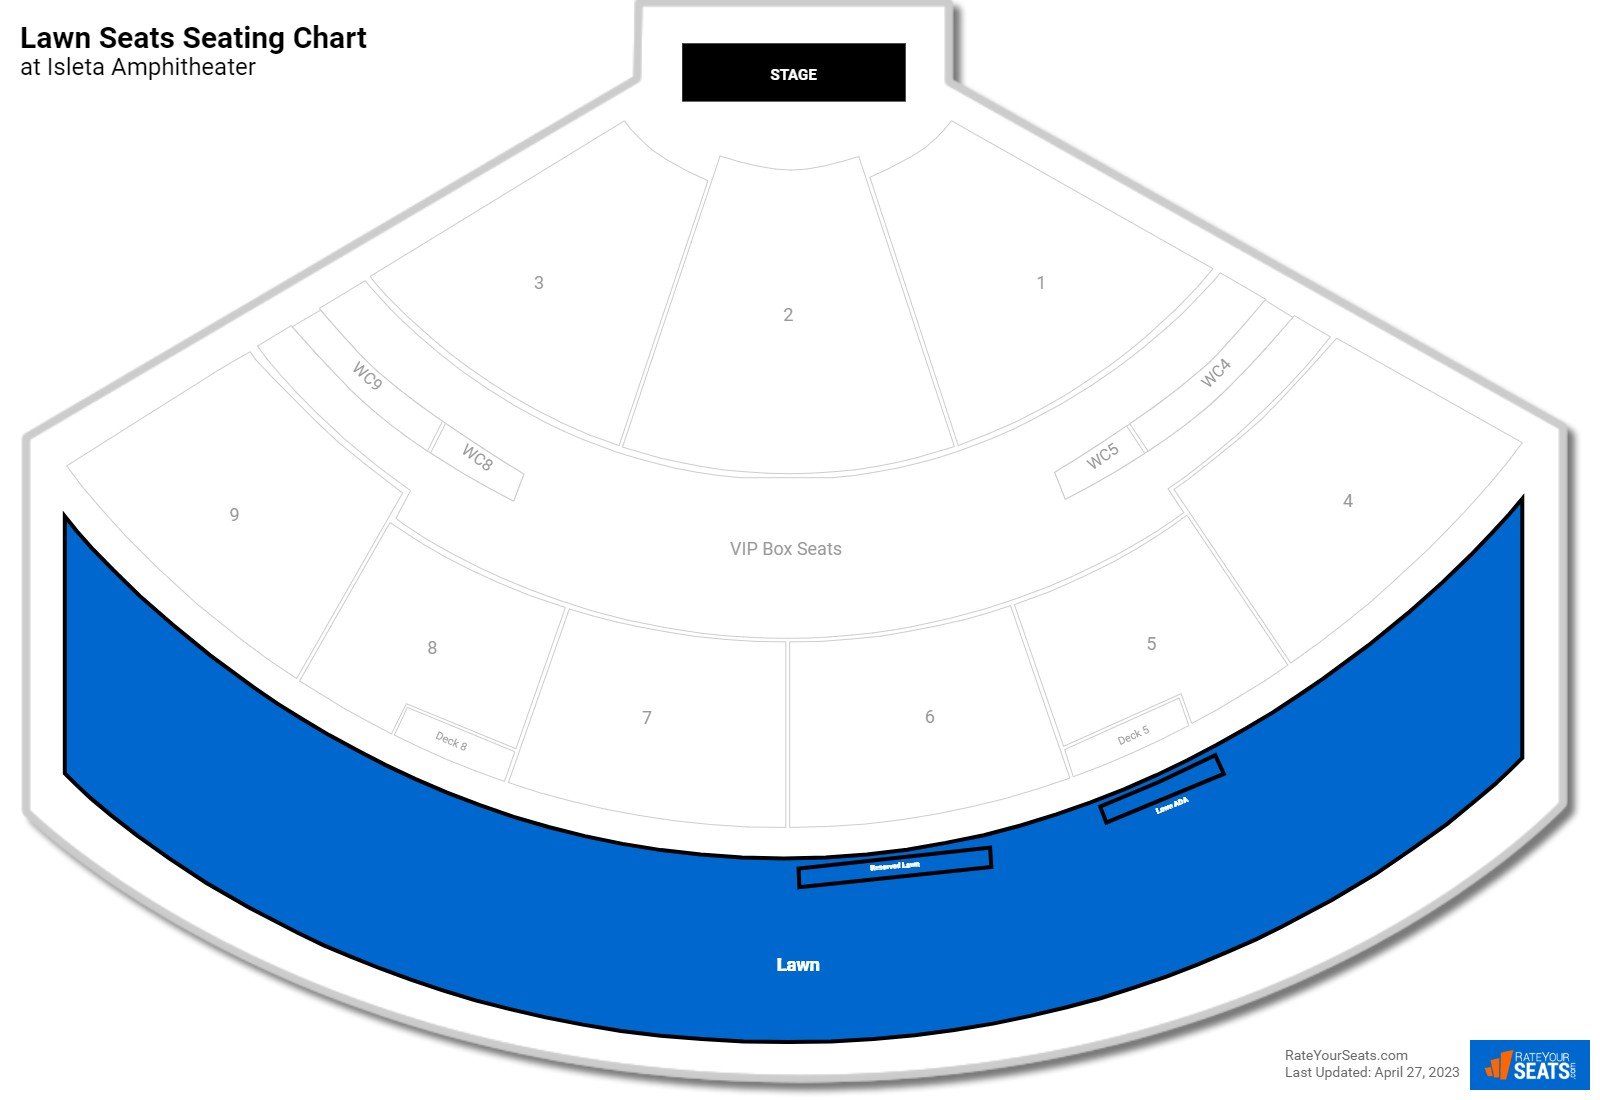 Concert Lawn Seats Seating Chart at Isleta Amphitheater